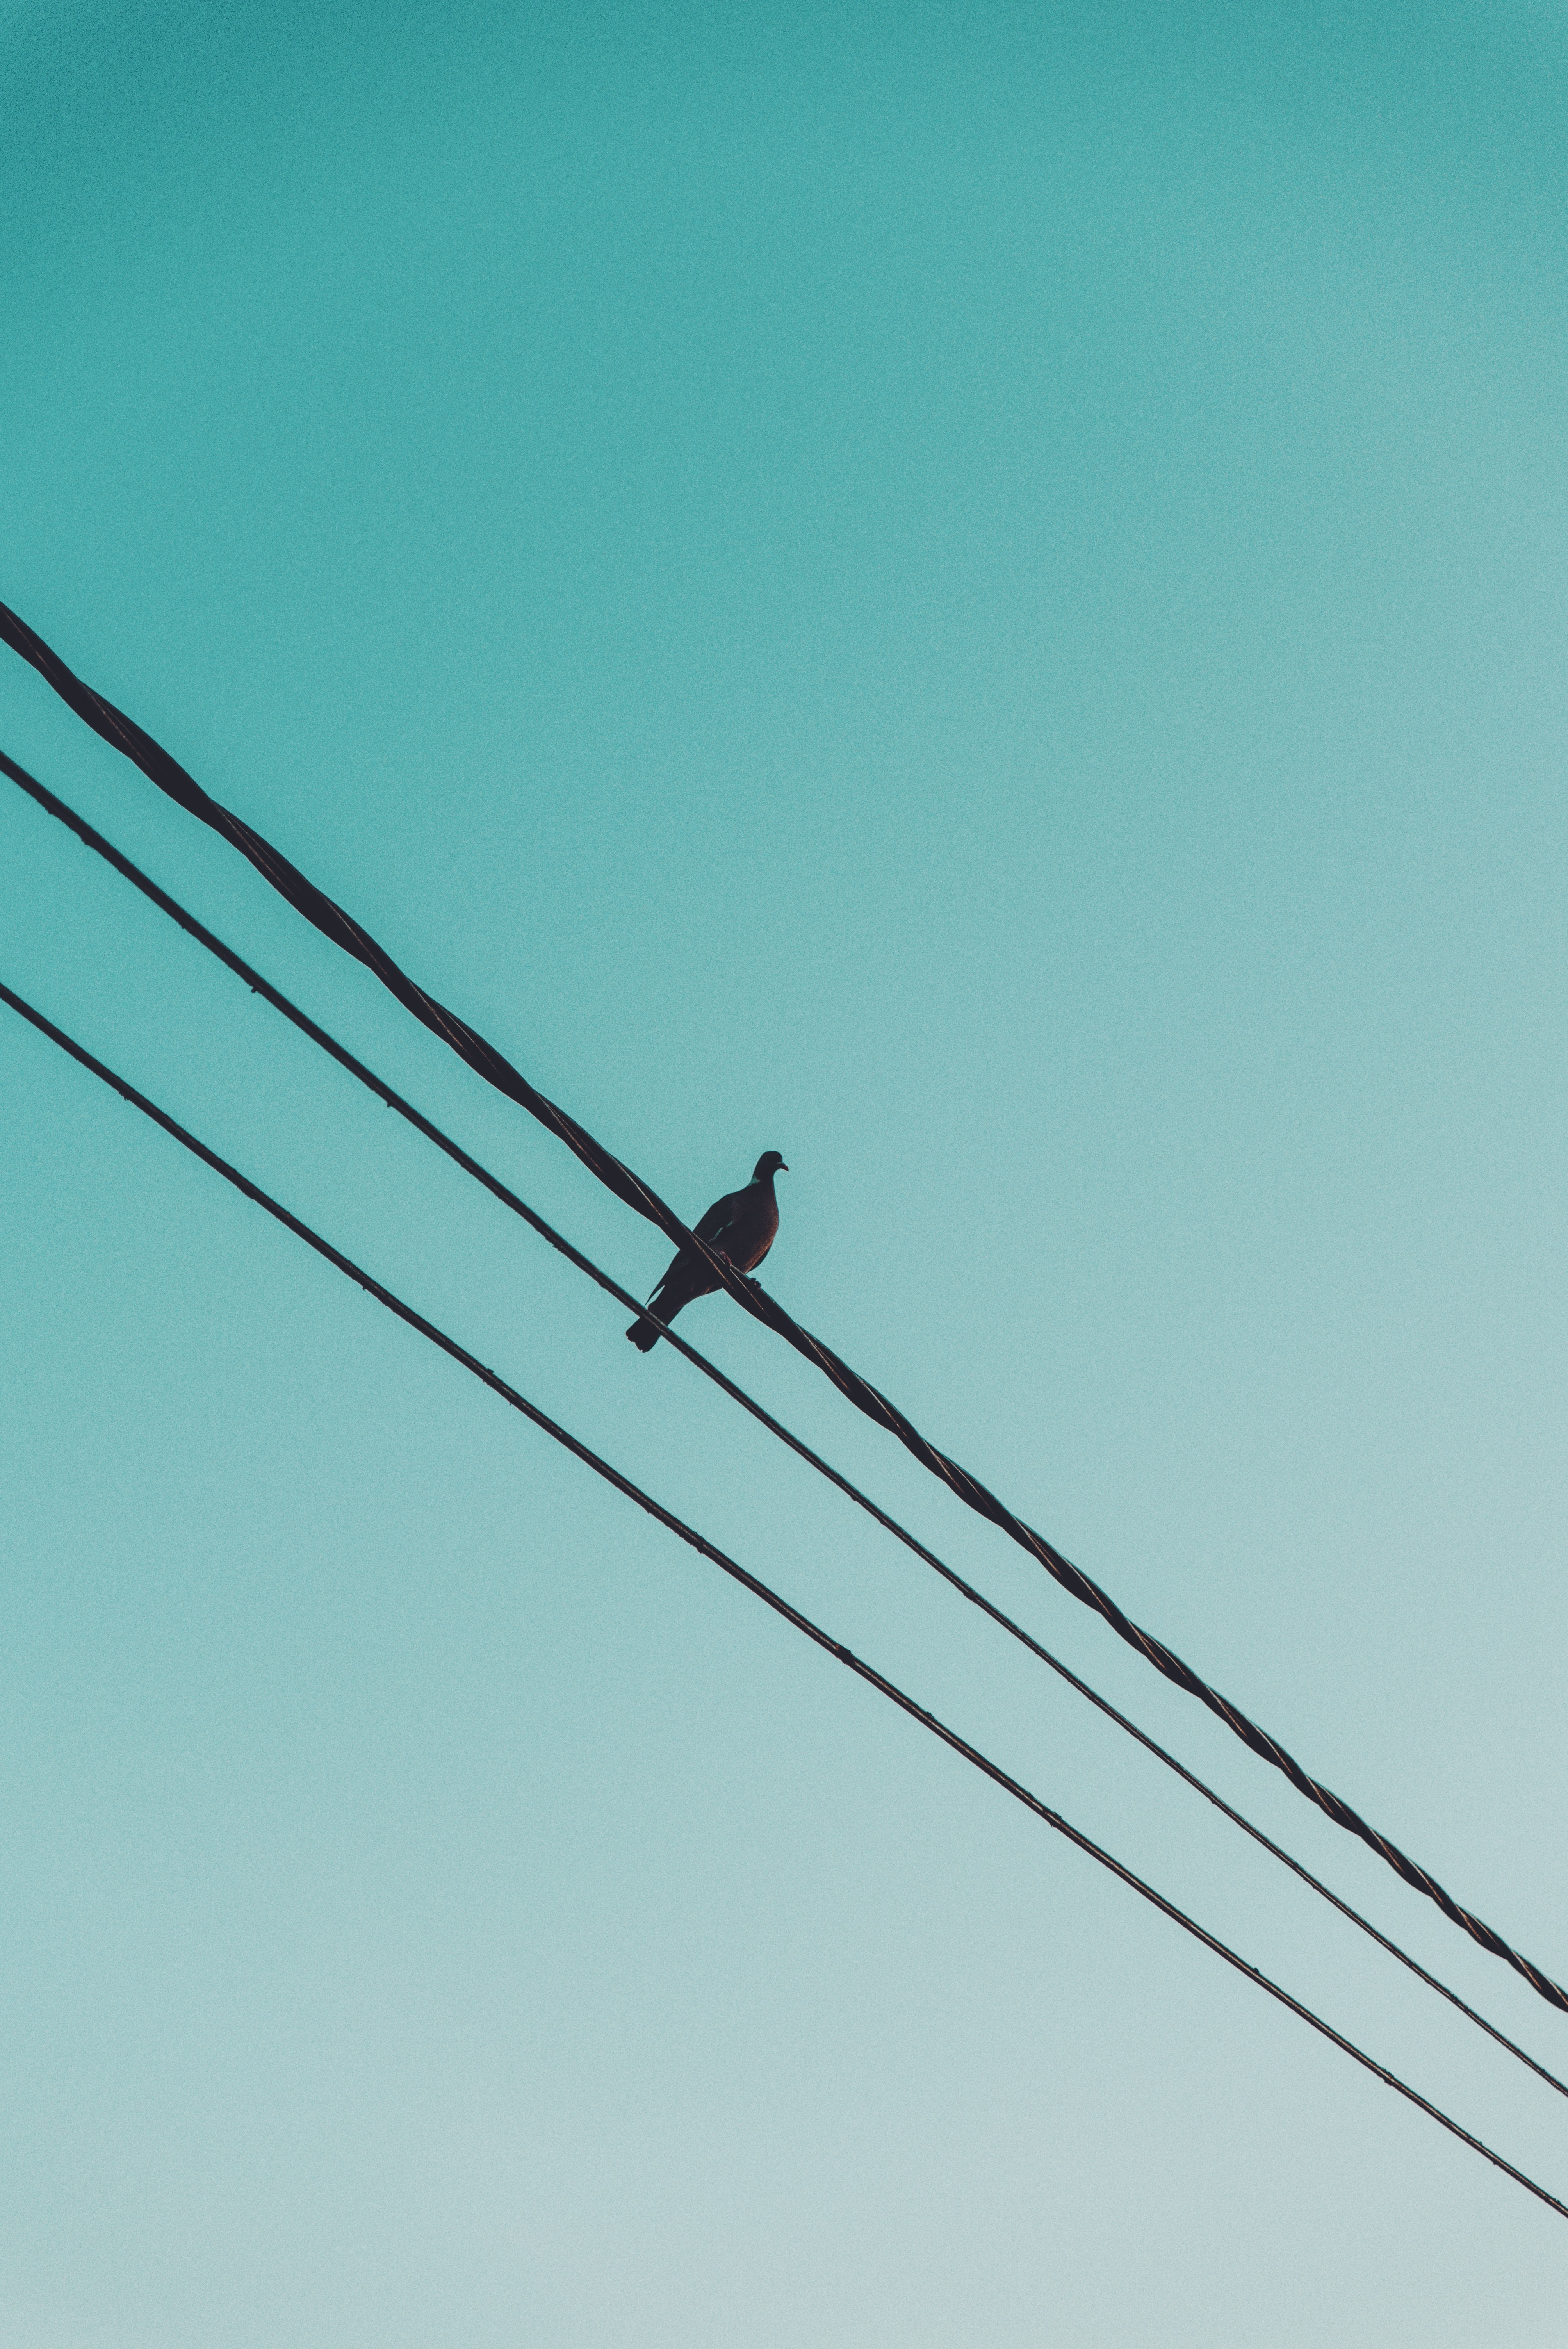 wires, dove, animals, sky, wire 32K